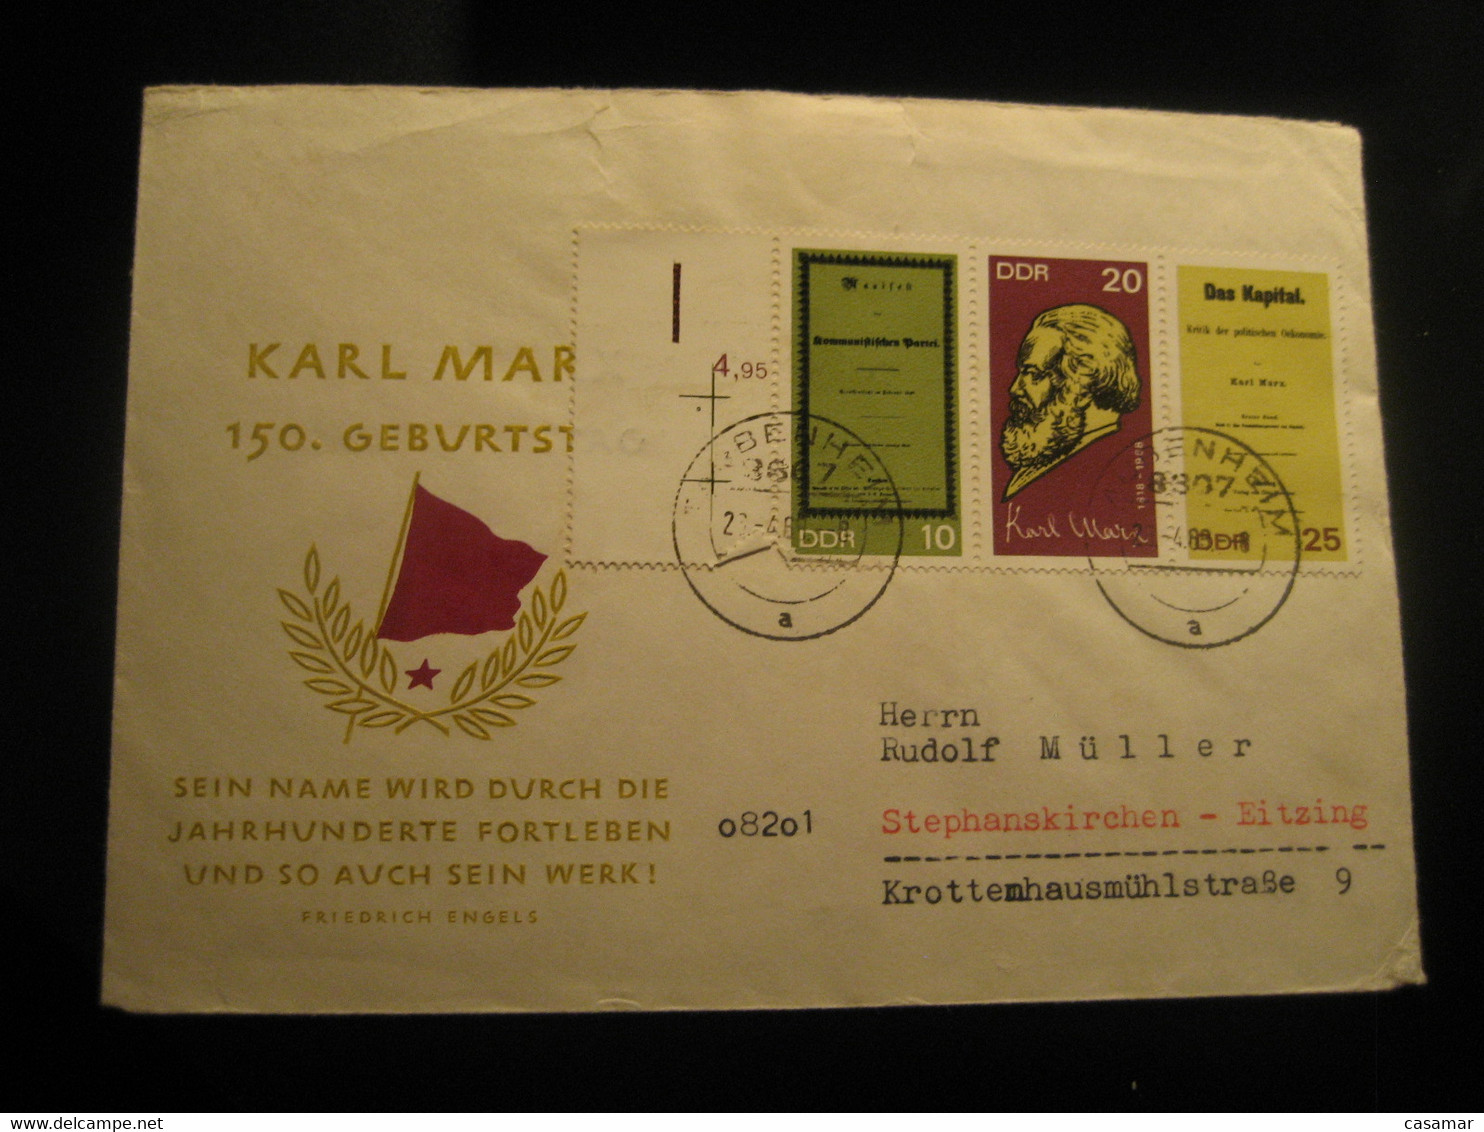 TAUBENHEIM 1968 To Eitzing Karl Marx Communism Philosophy Stamp On Cancel Cover DDR GERMANY - Karl Marx